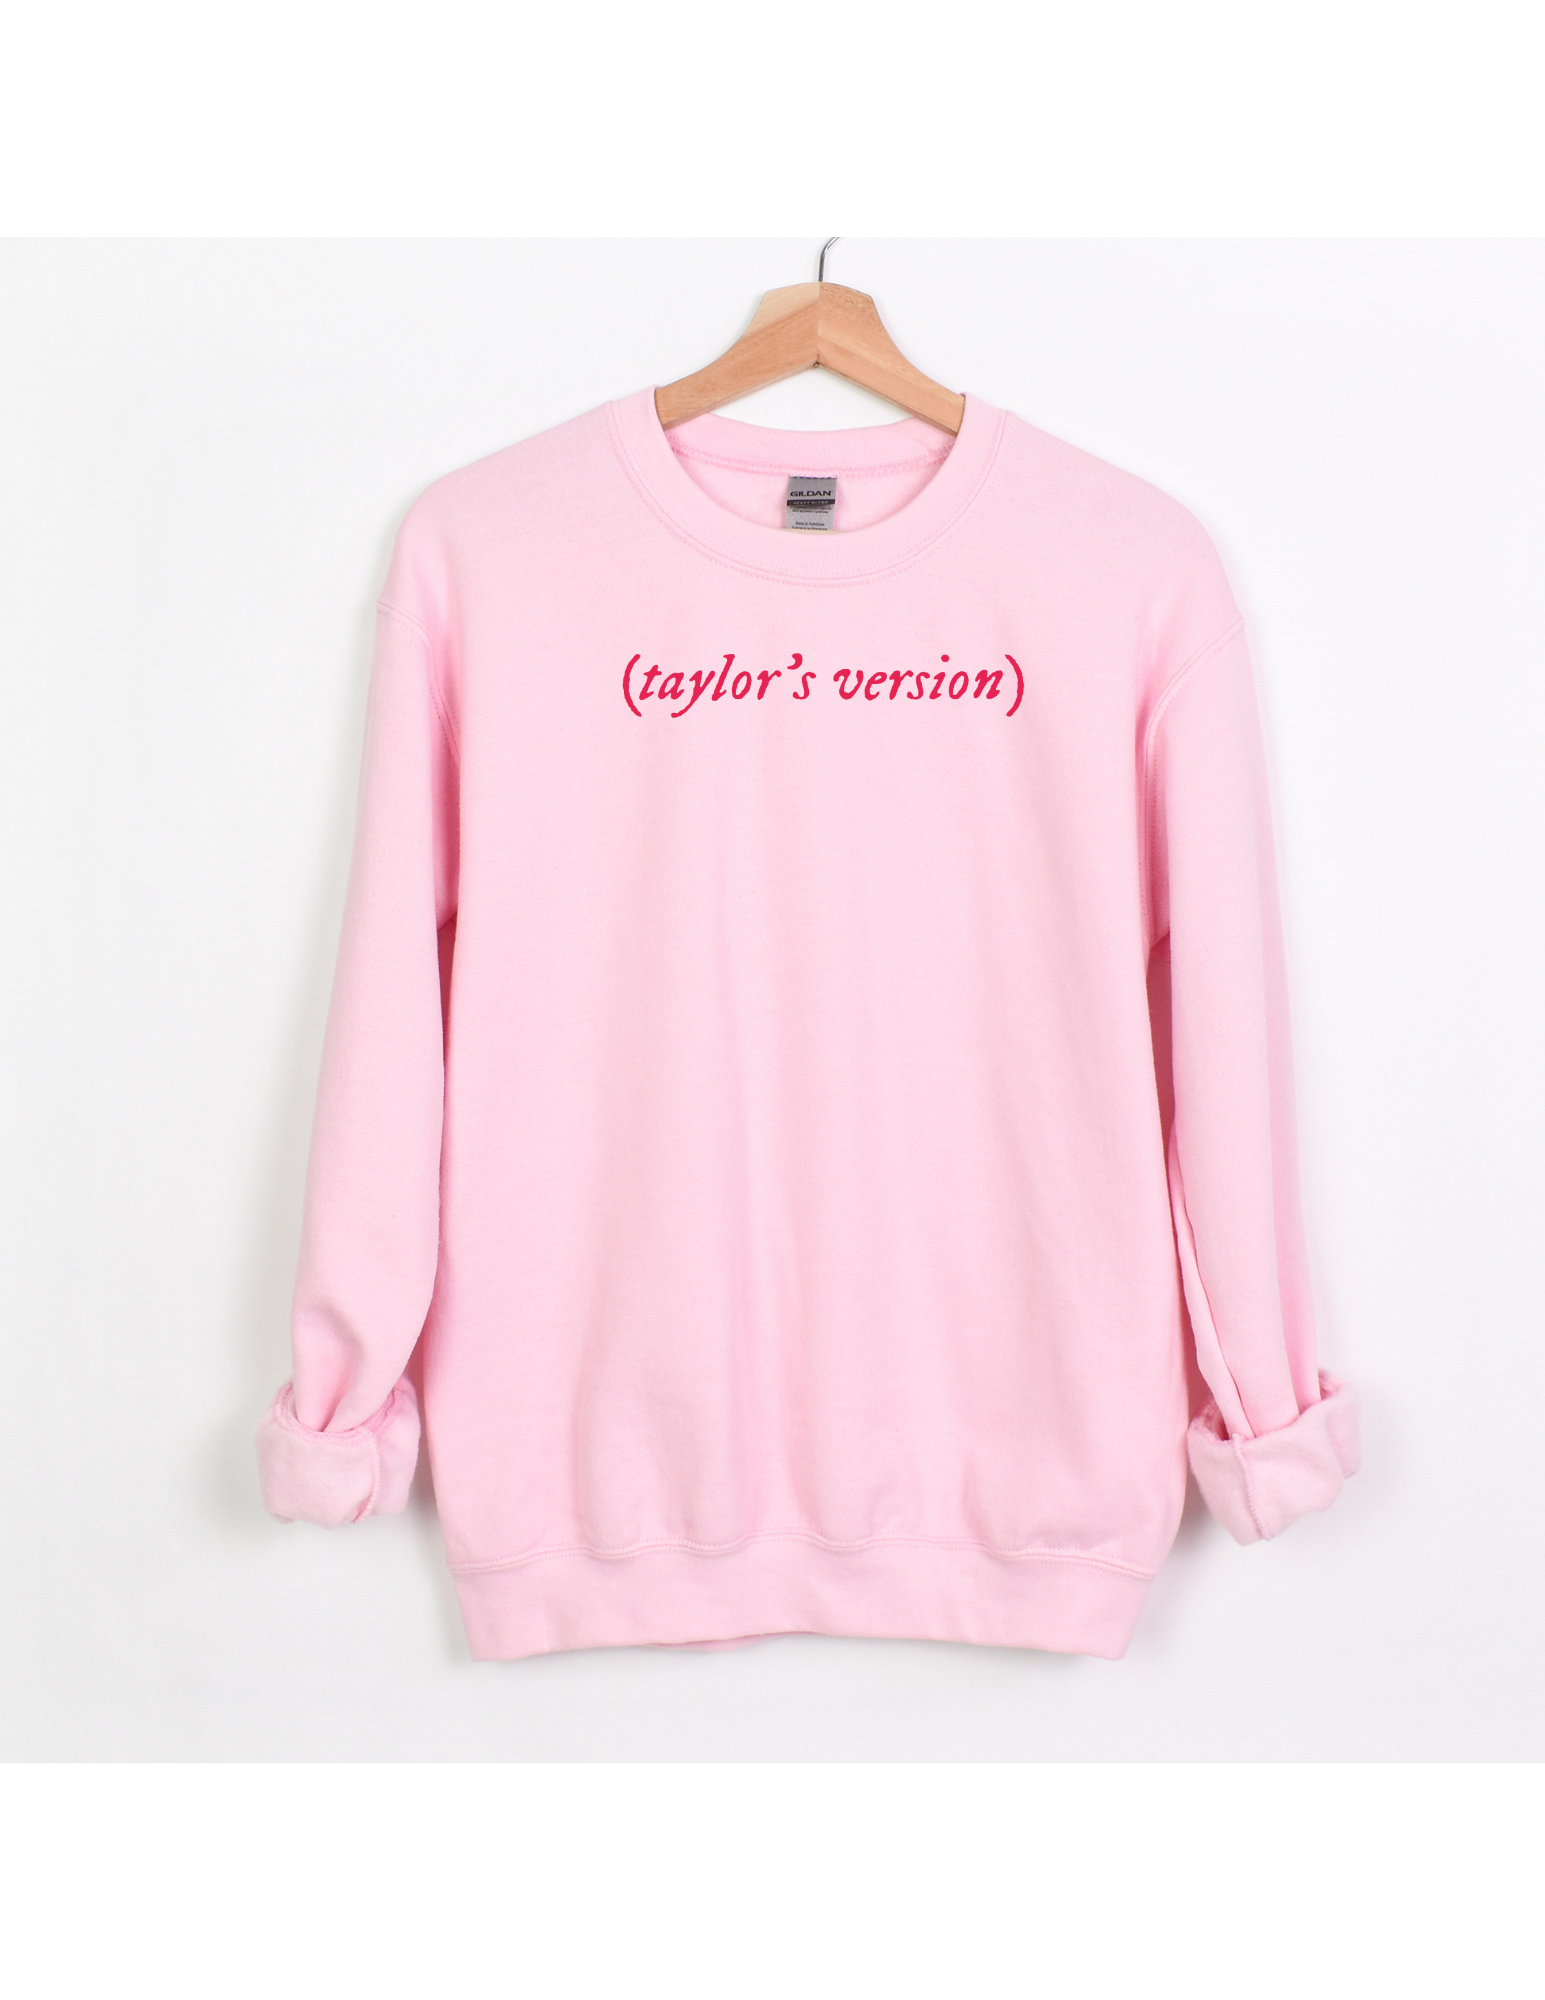 Taylor's Version Sweatshirt | Pink + Red